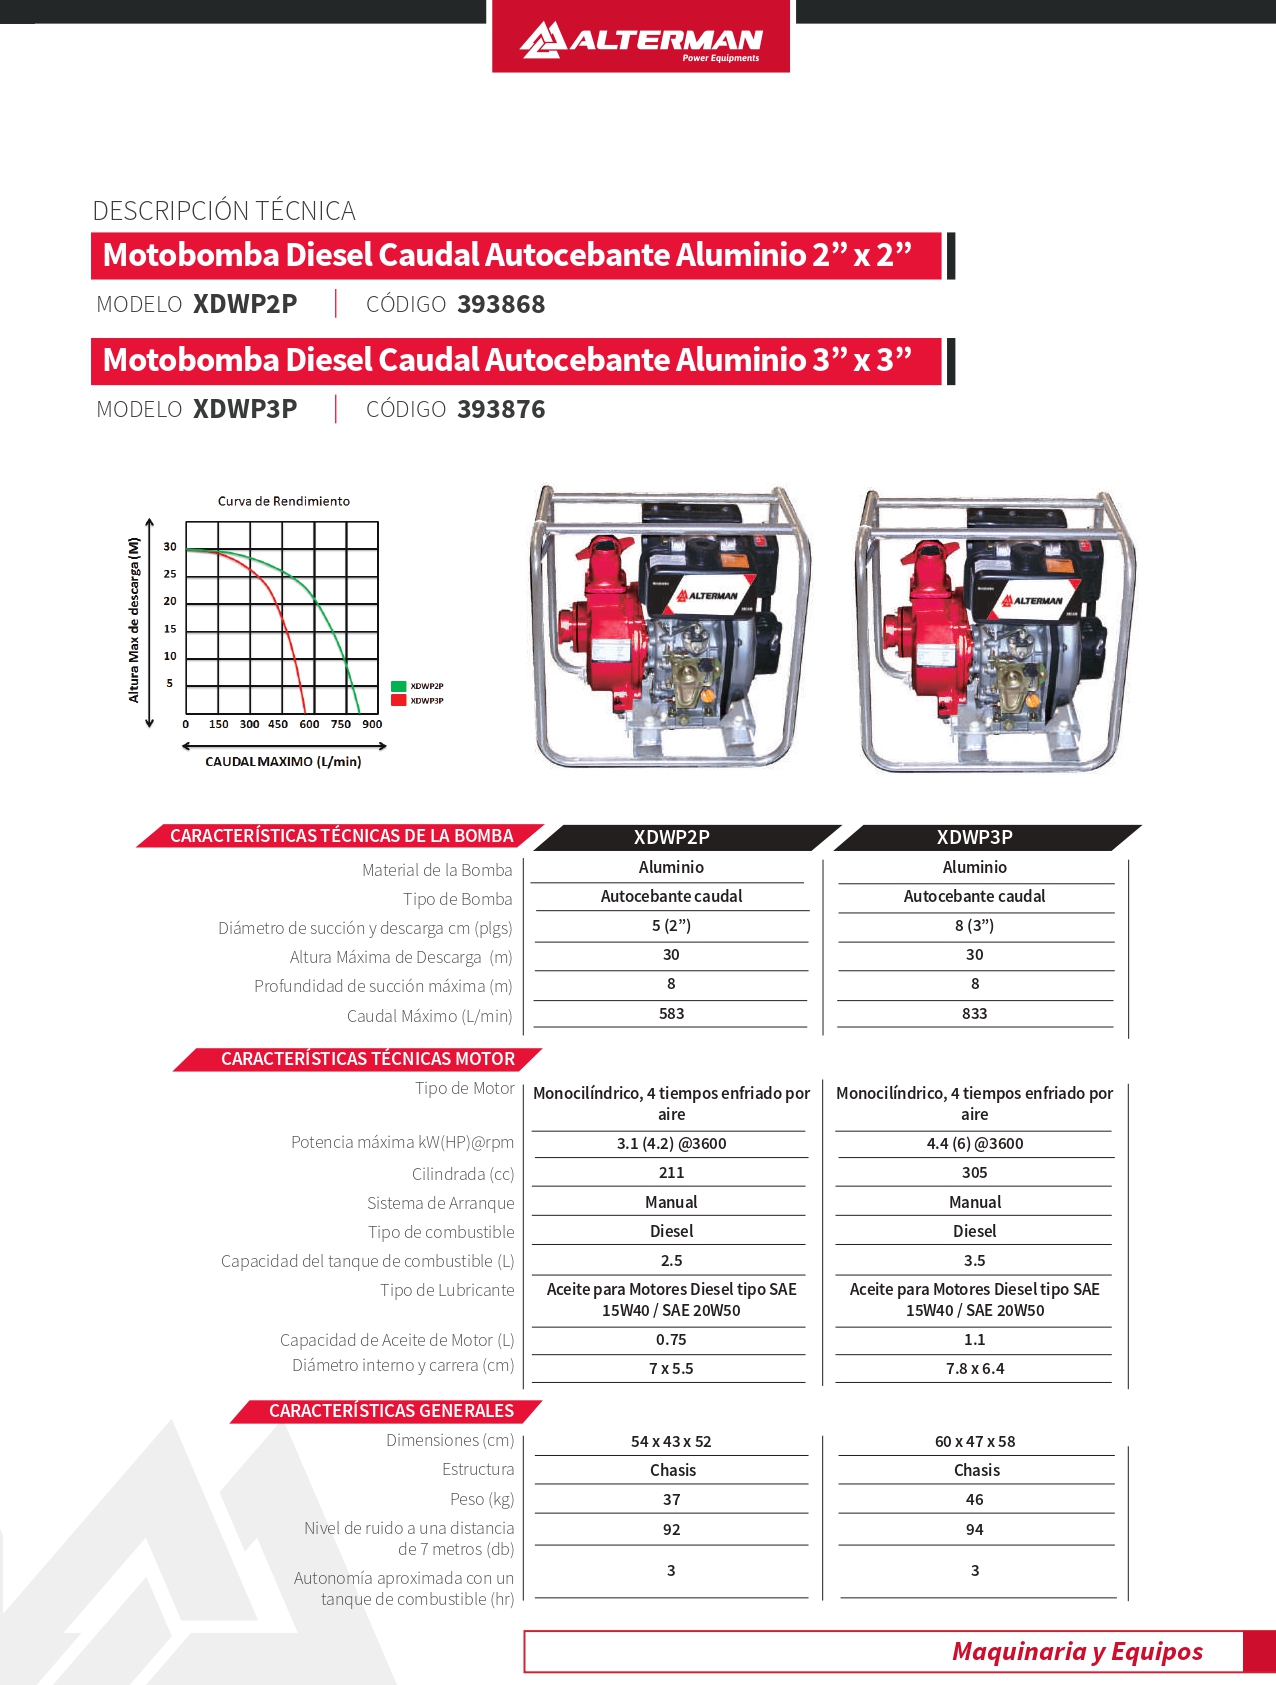 MOTOBOMBA A GASOLINA 4.2 KW / 3600 RPM – 6.5 HP (2” X 2”)